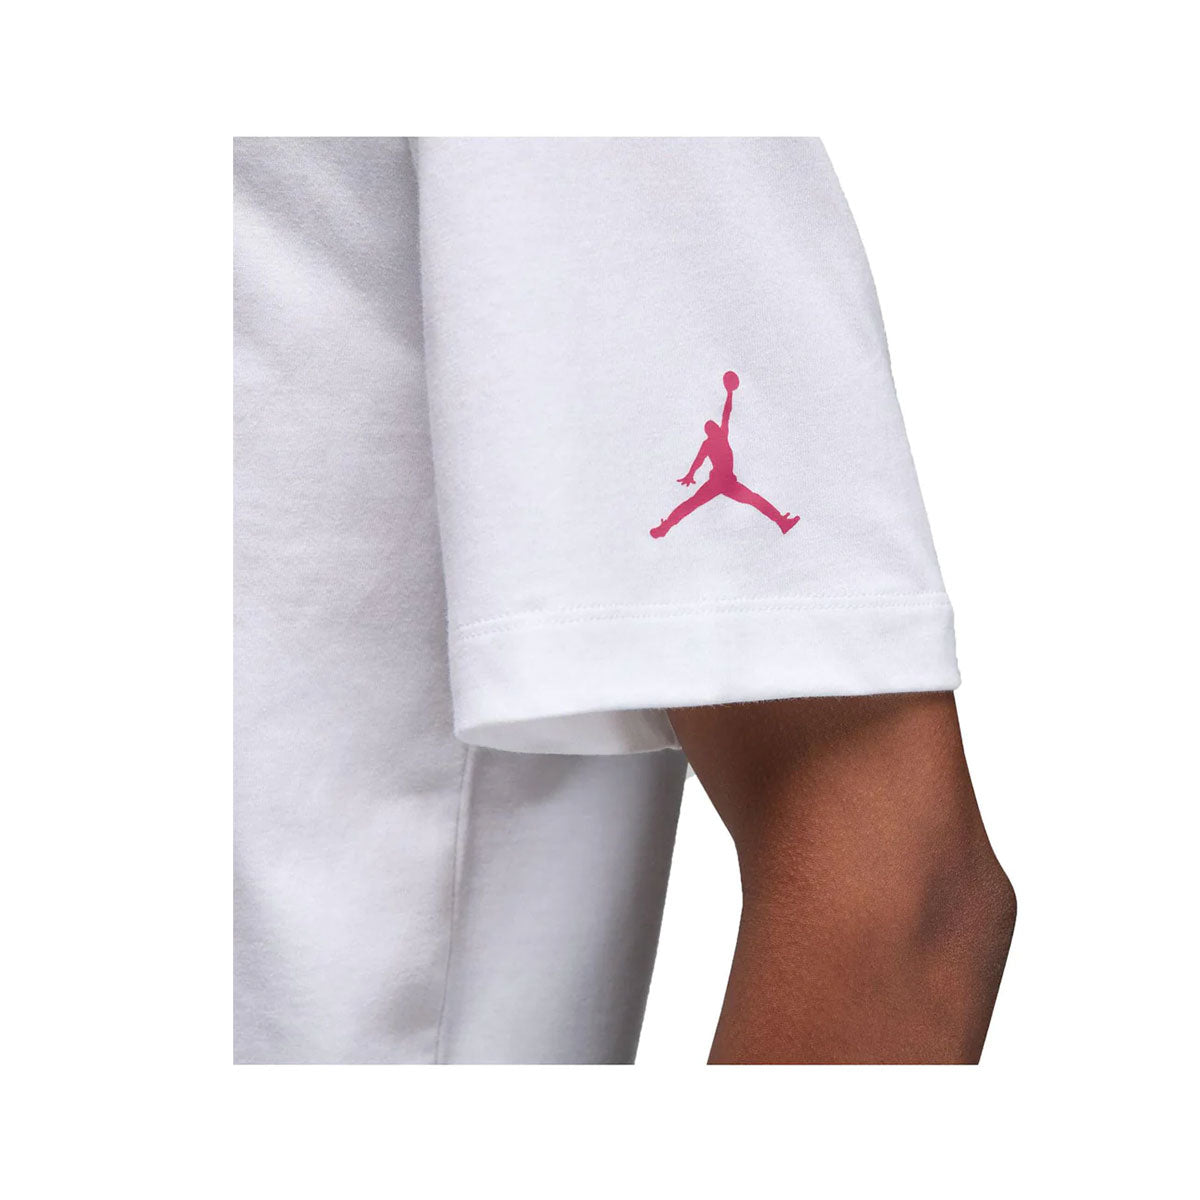 Jordan Jumpman Greatest Ever Graphic T-Shirt Men's